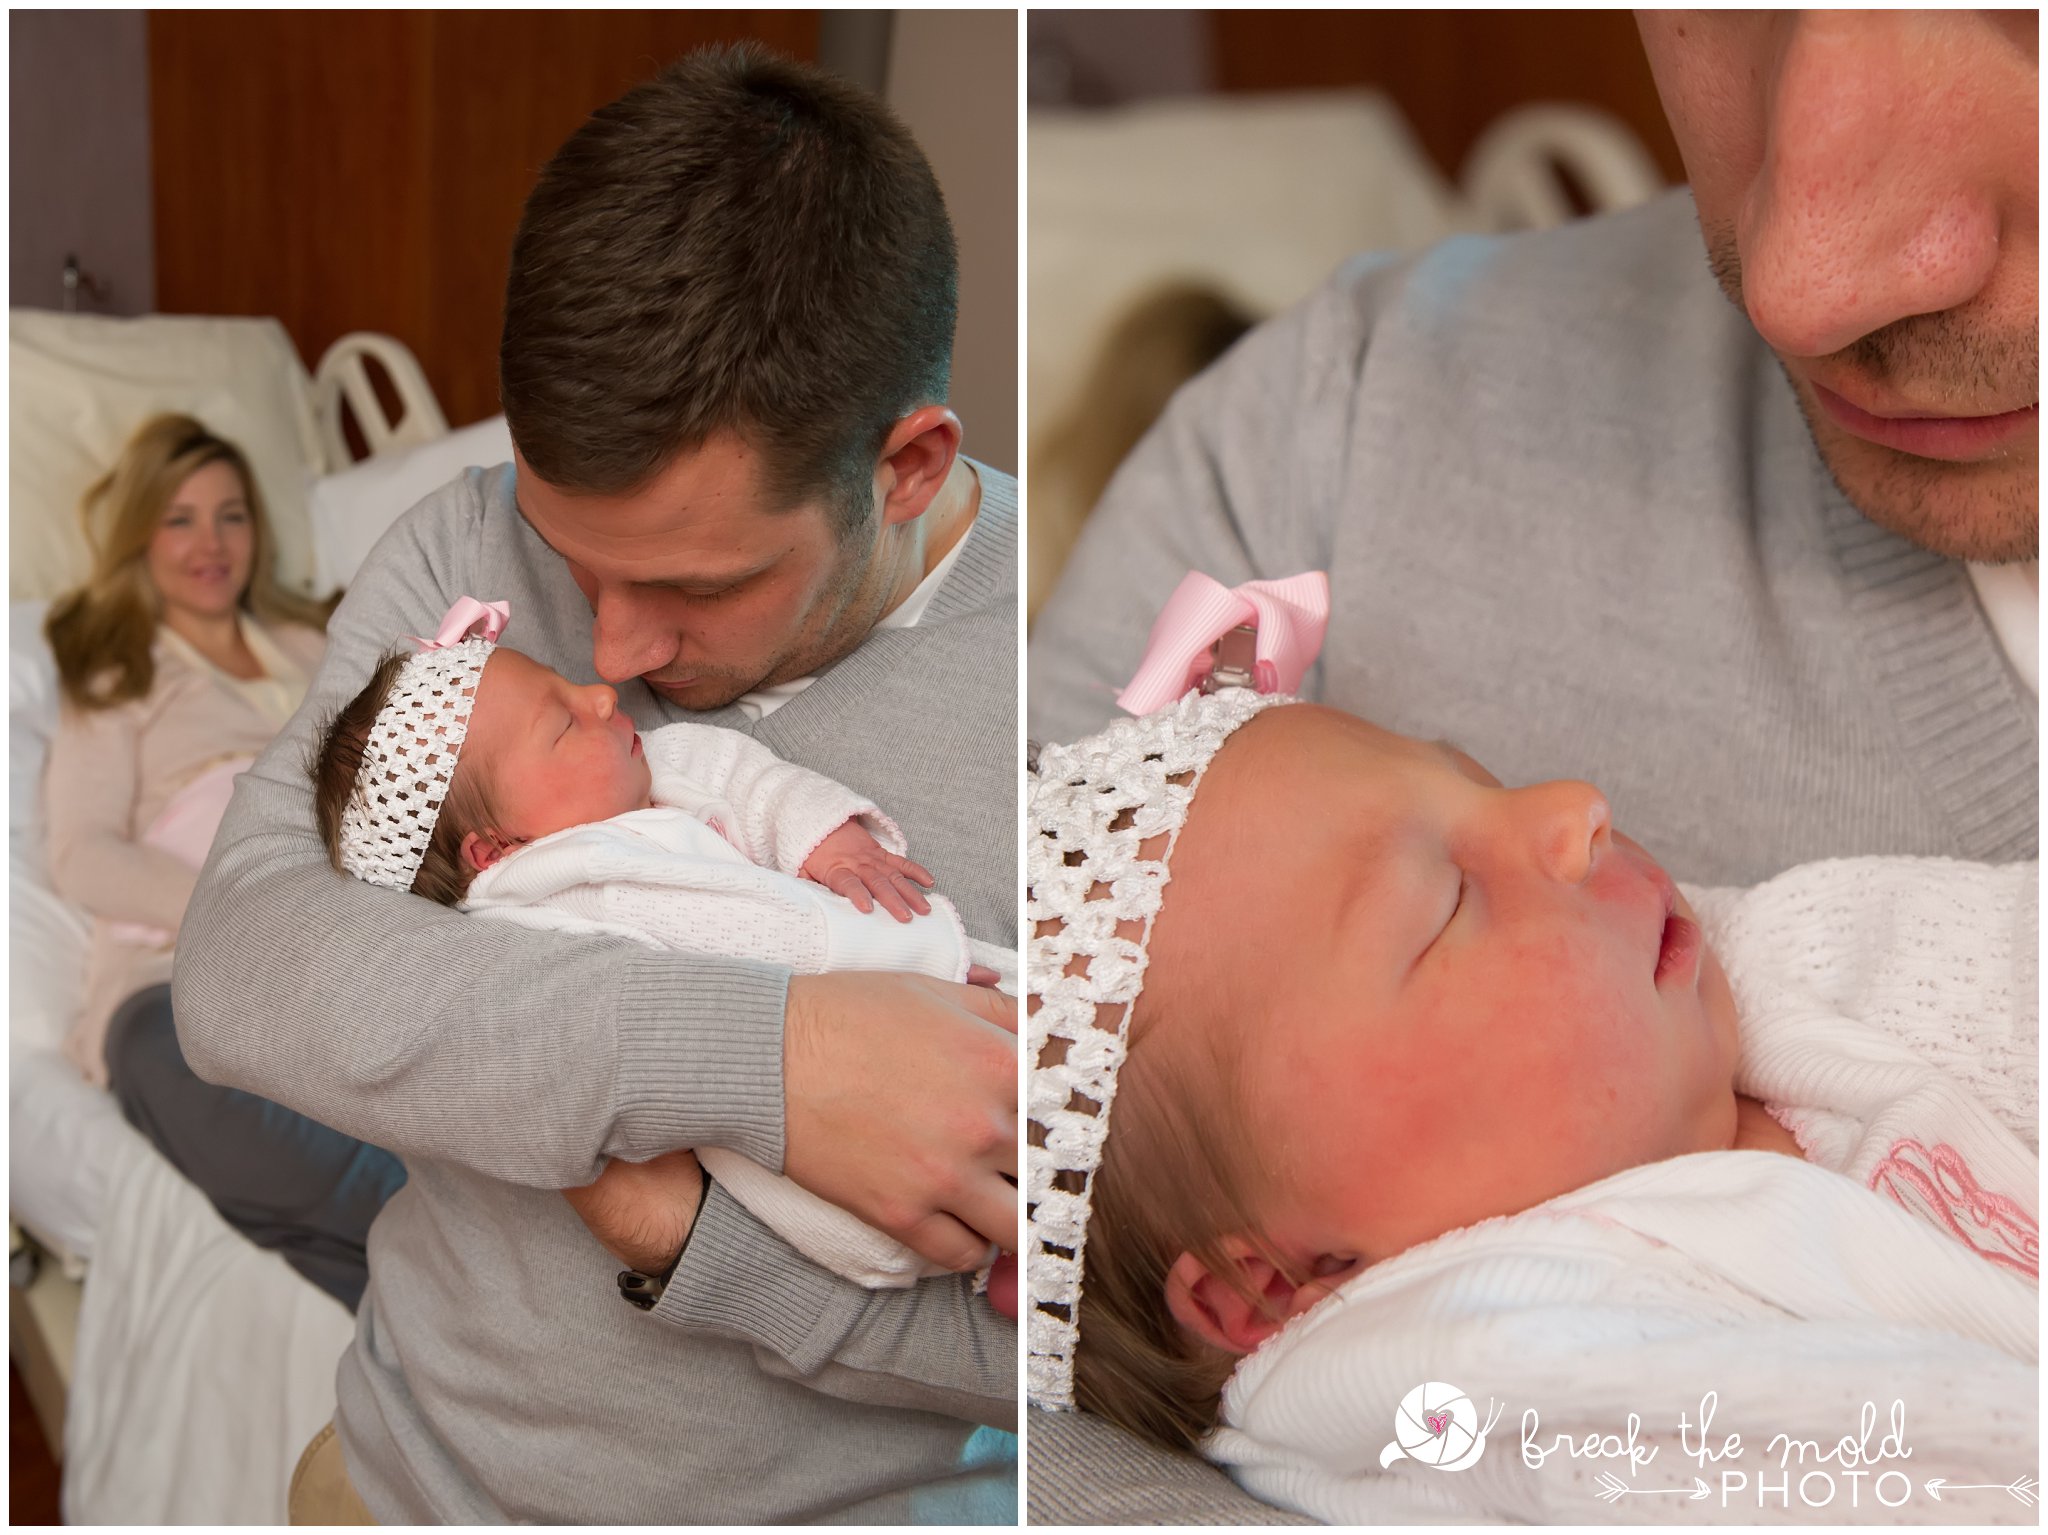 fresh-24-newborn-in-hospital-break-the-mold-photo-baby-girl-sweet-in-room-photos (45).jpg